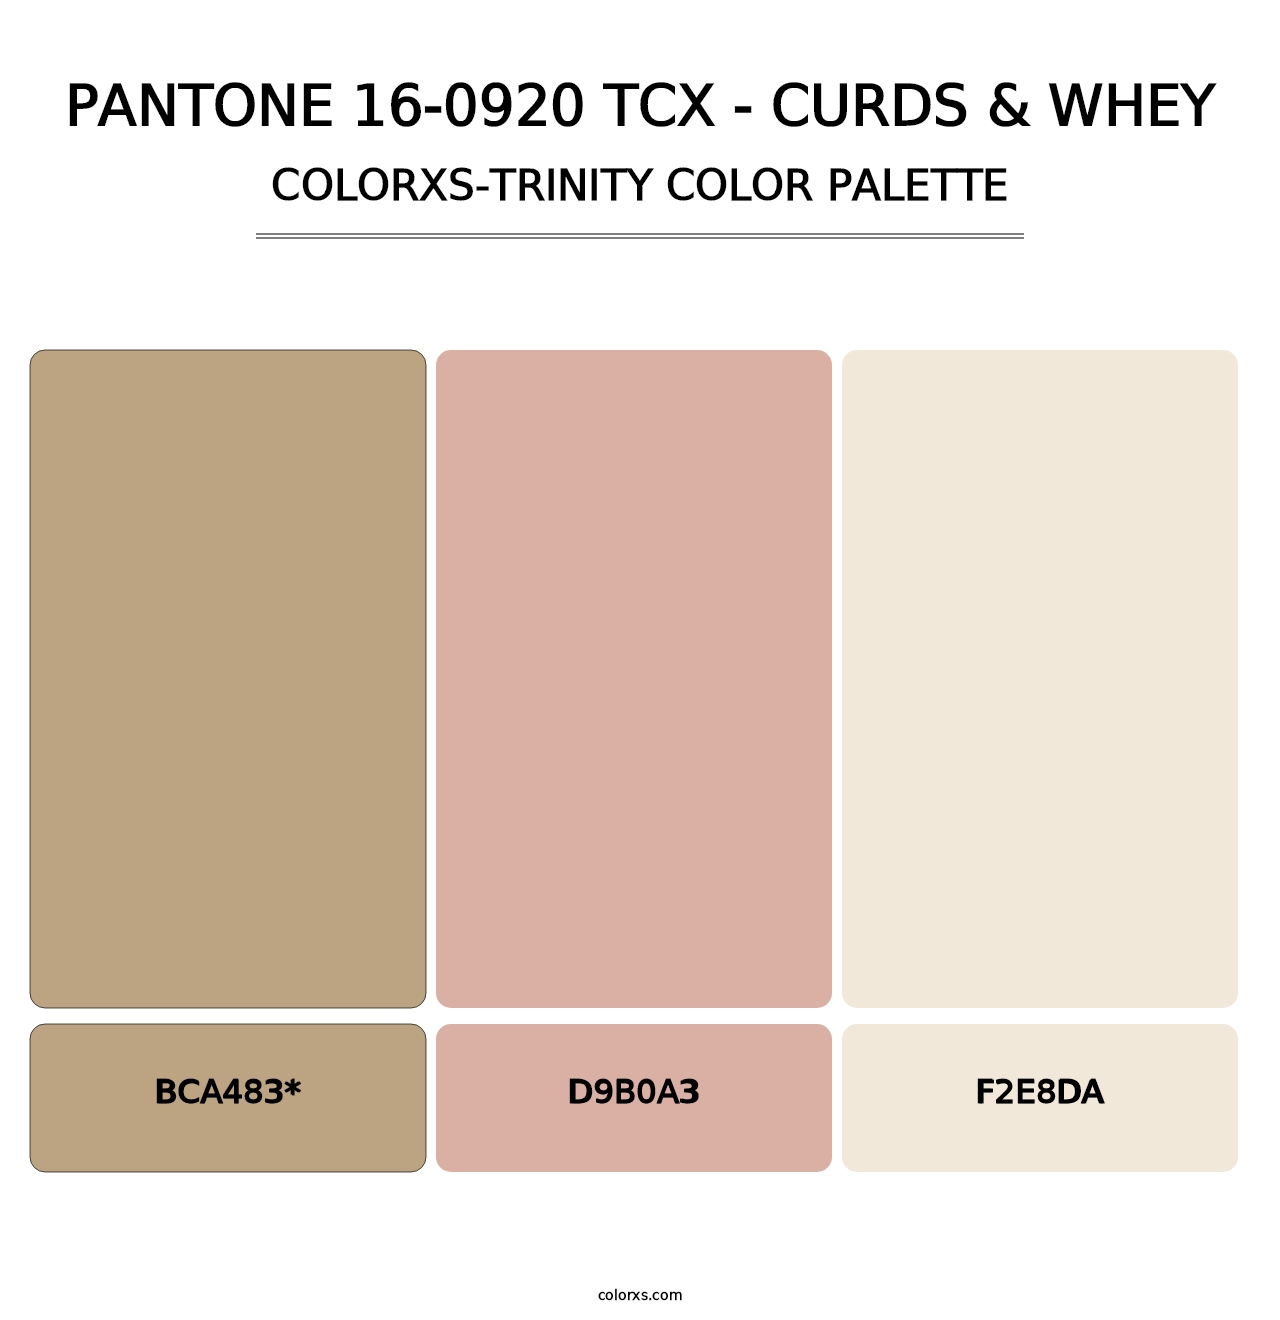 PANTONE 16-0920 TCX - Curds & Whey - Colorxs Trinity Palette